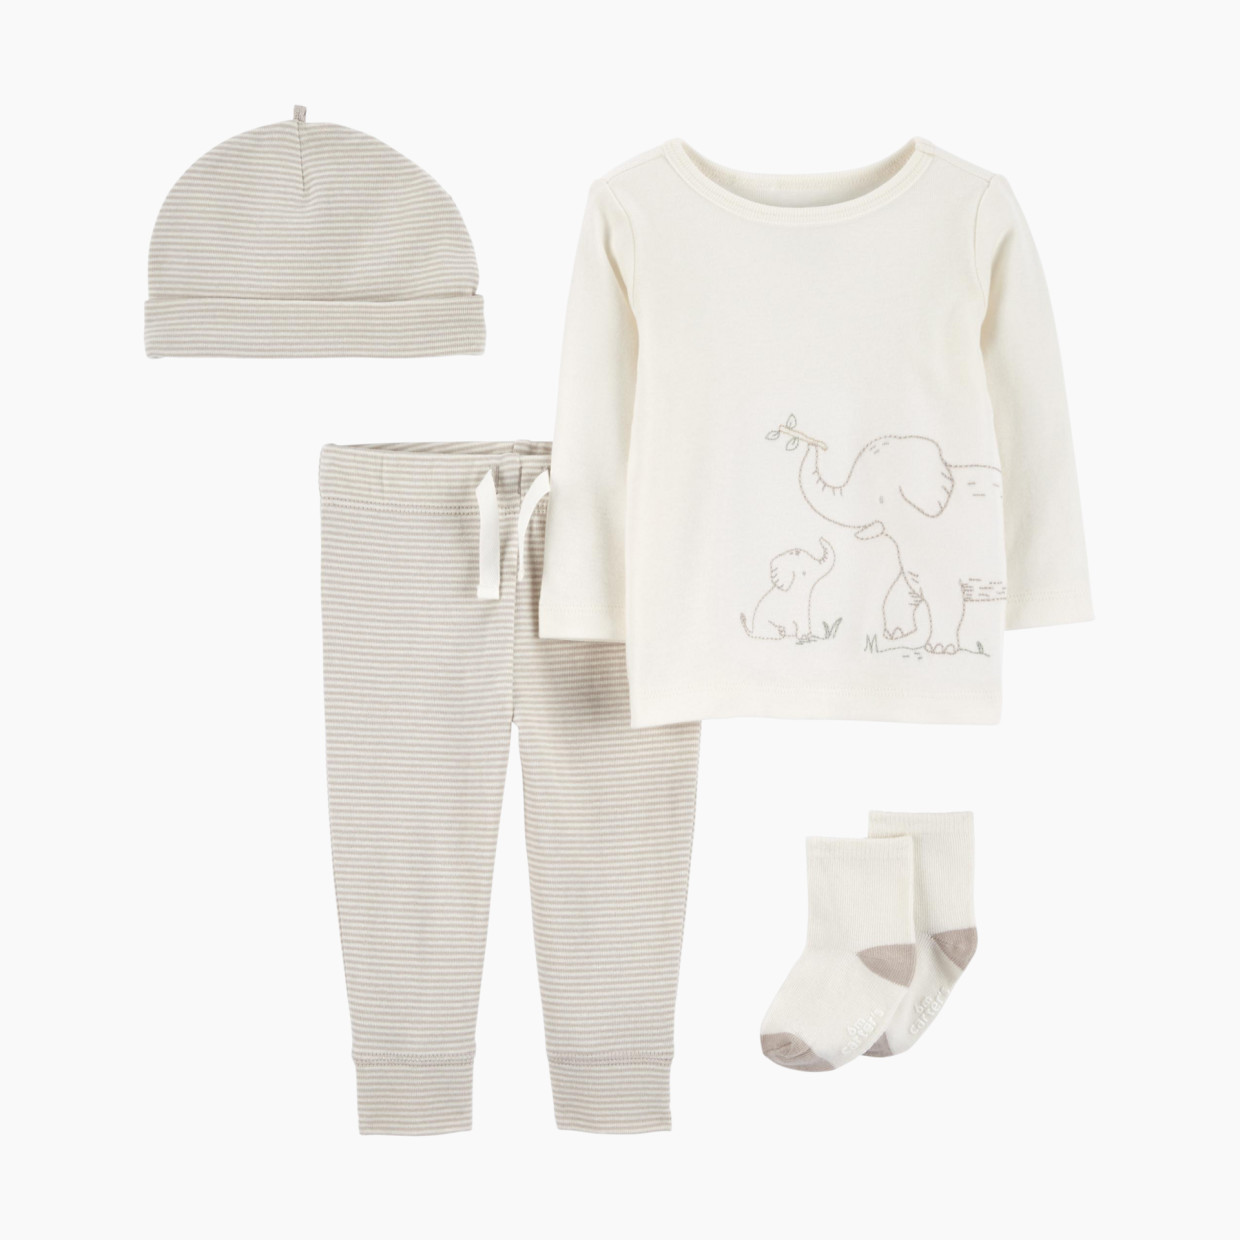 Carter's 4-Piece Elephant Outfit Set - Grey/Ivory, 6 M.